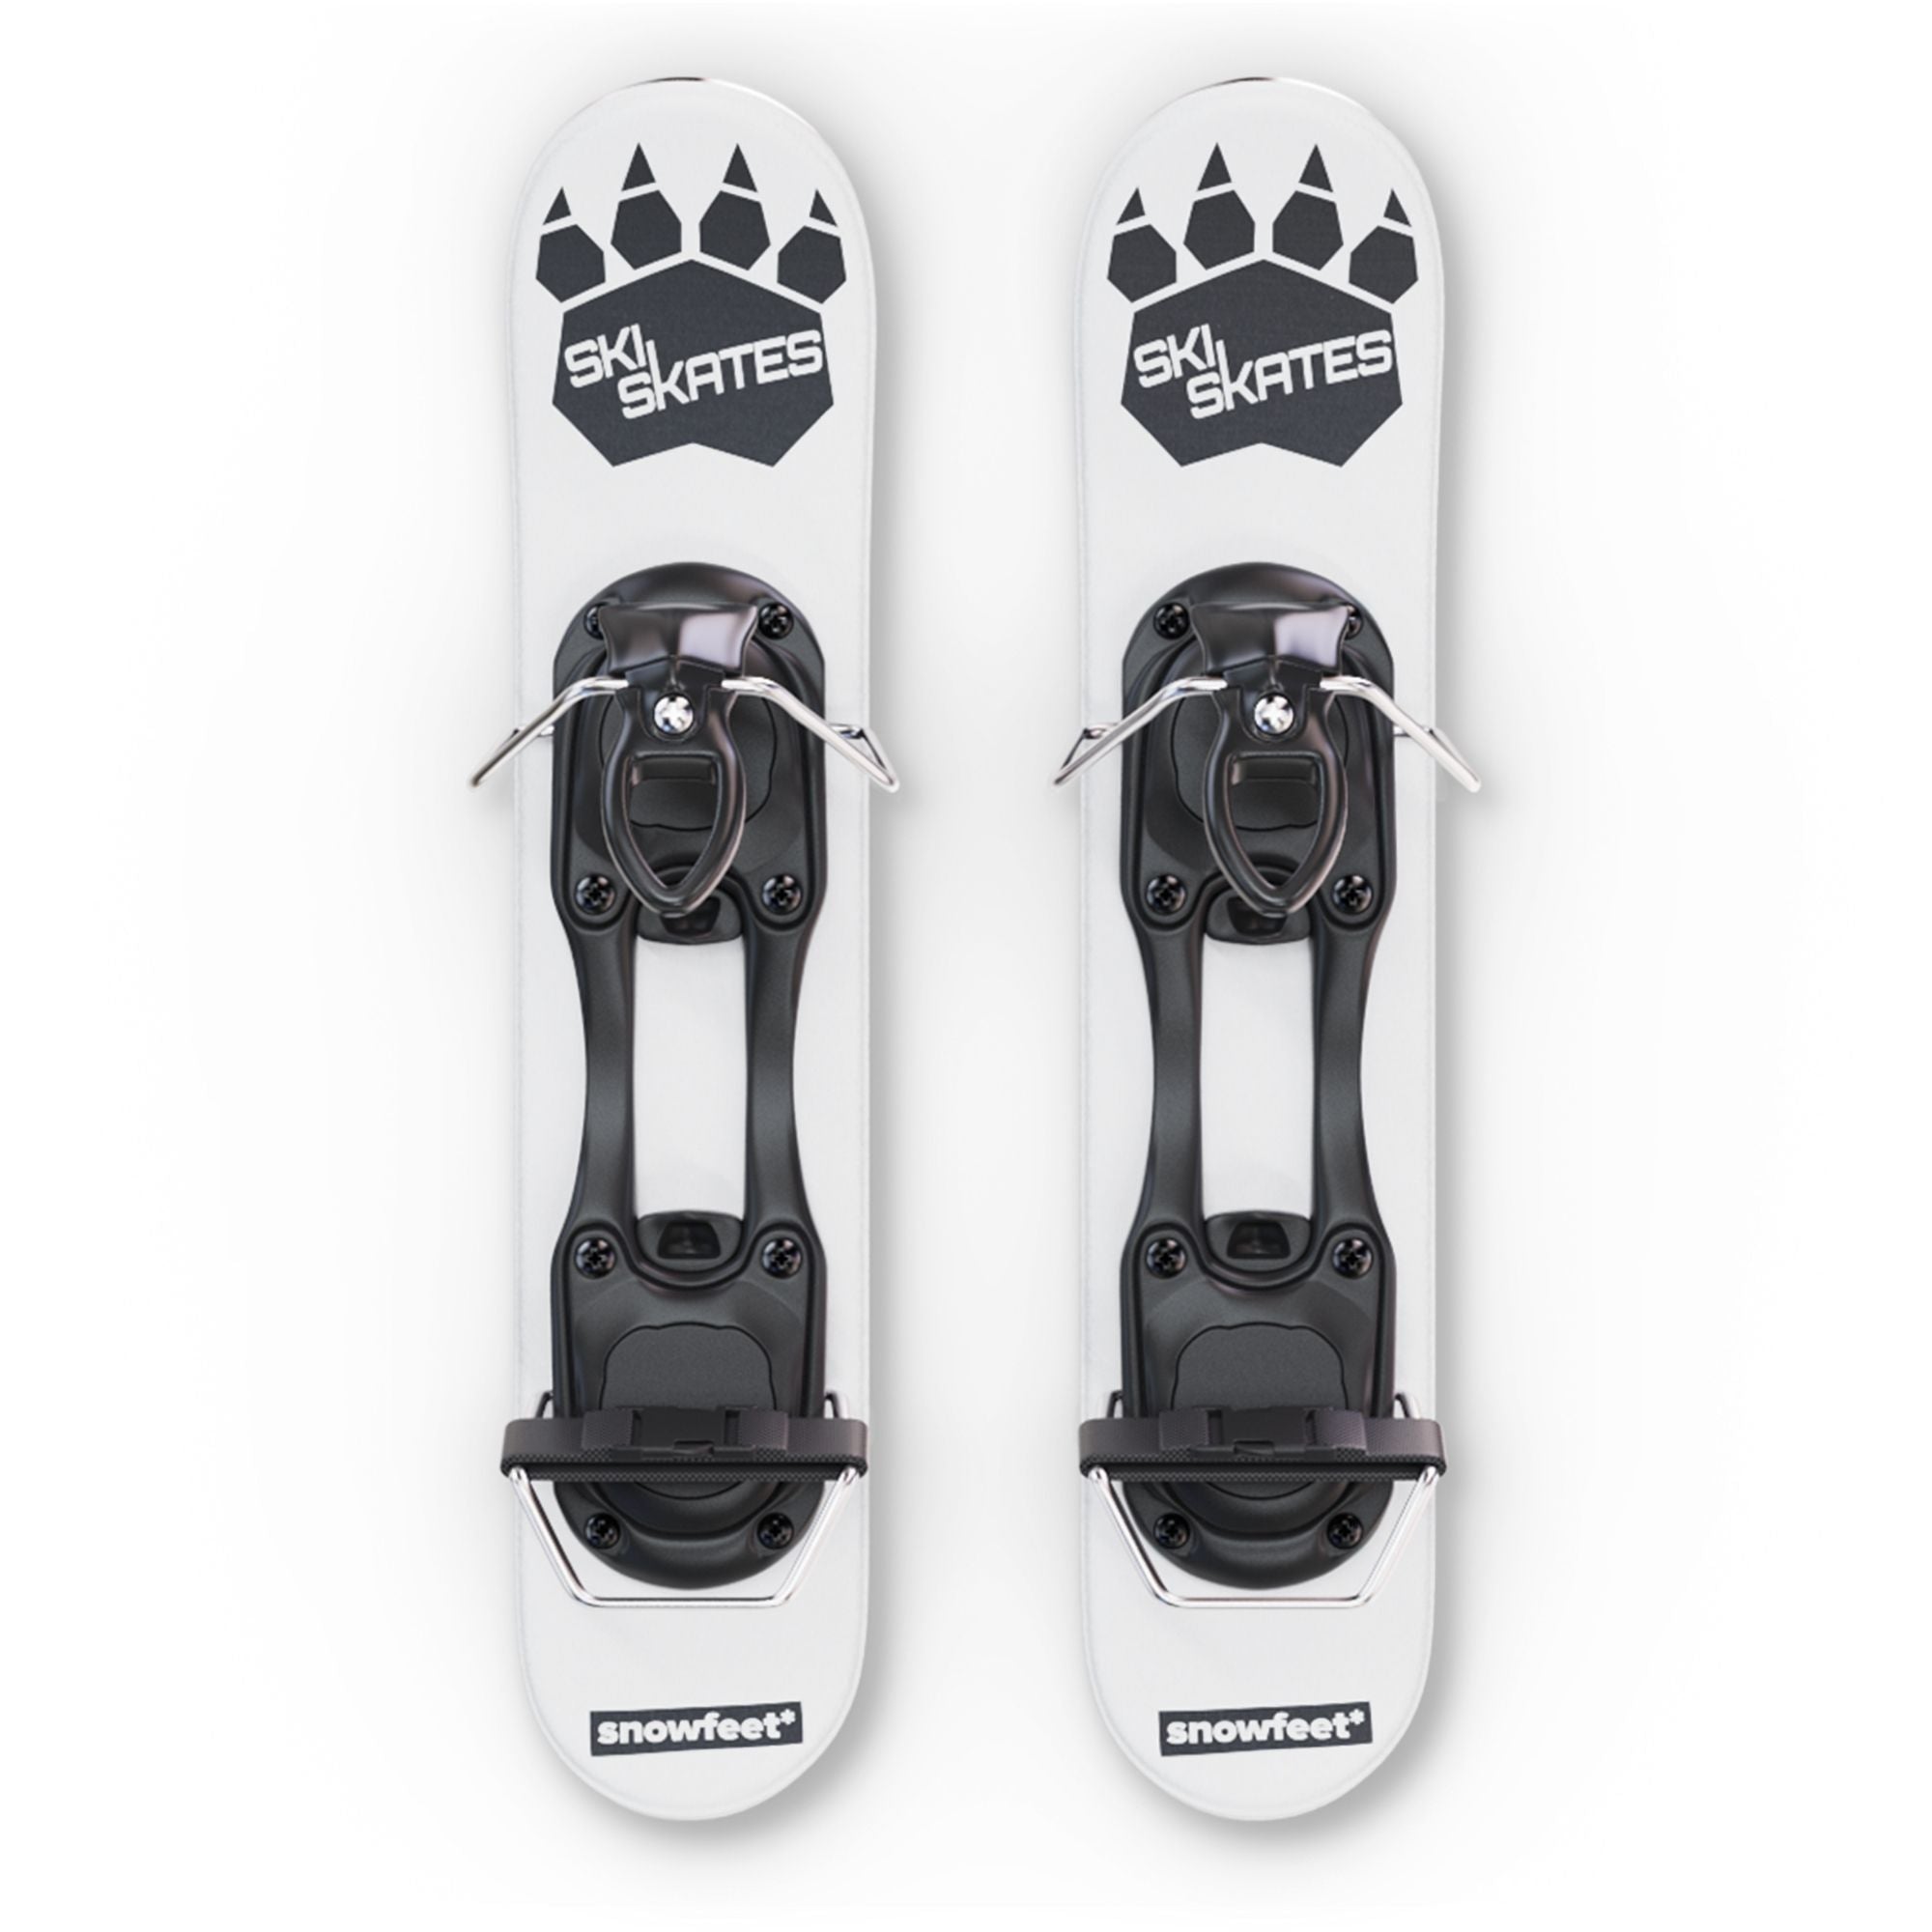 Skiskates - Mini Skis - Official Website - Reviews